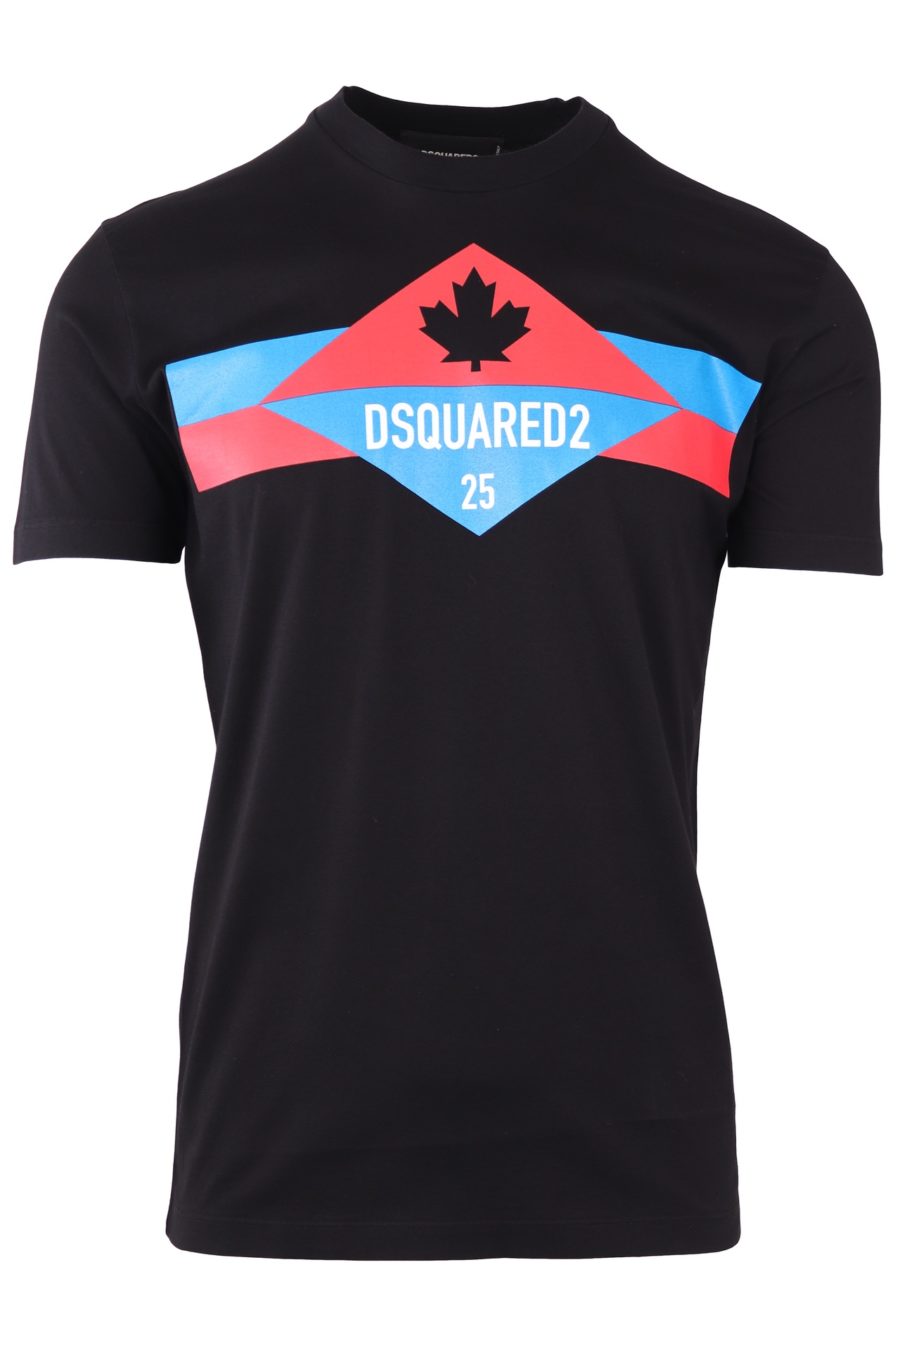 T-shirt Dsquared2 schwarz mit blauem und rotem Logo - 81cbf493f2de3eb486d6779ff174133b90efb2ed